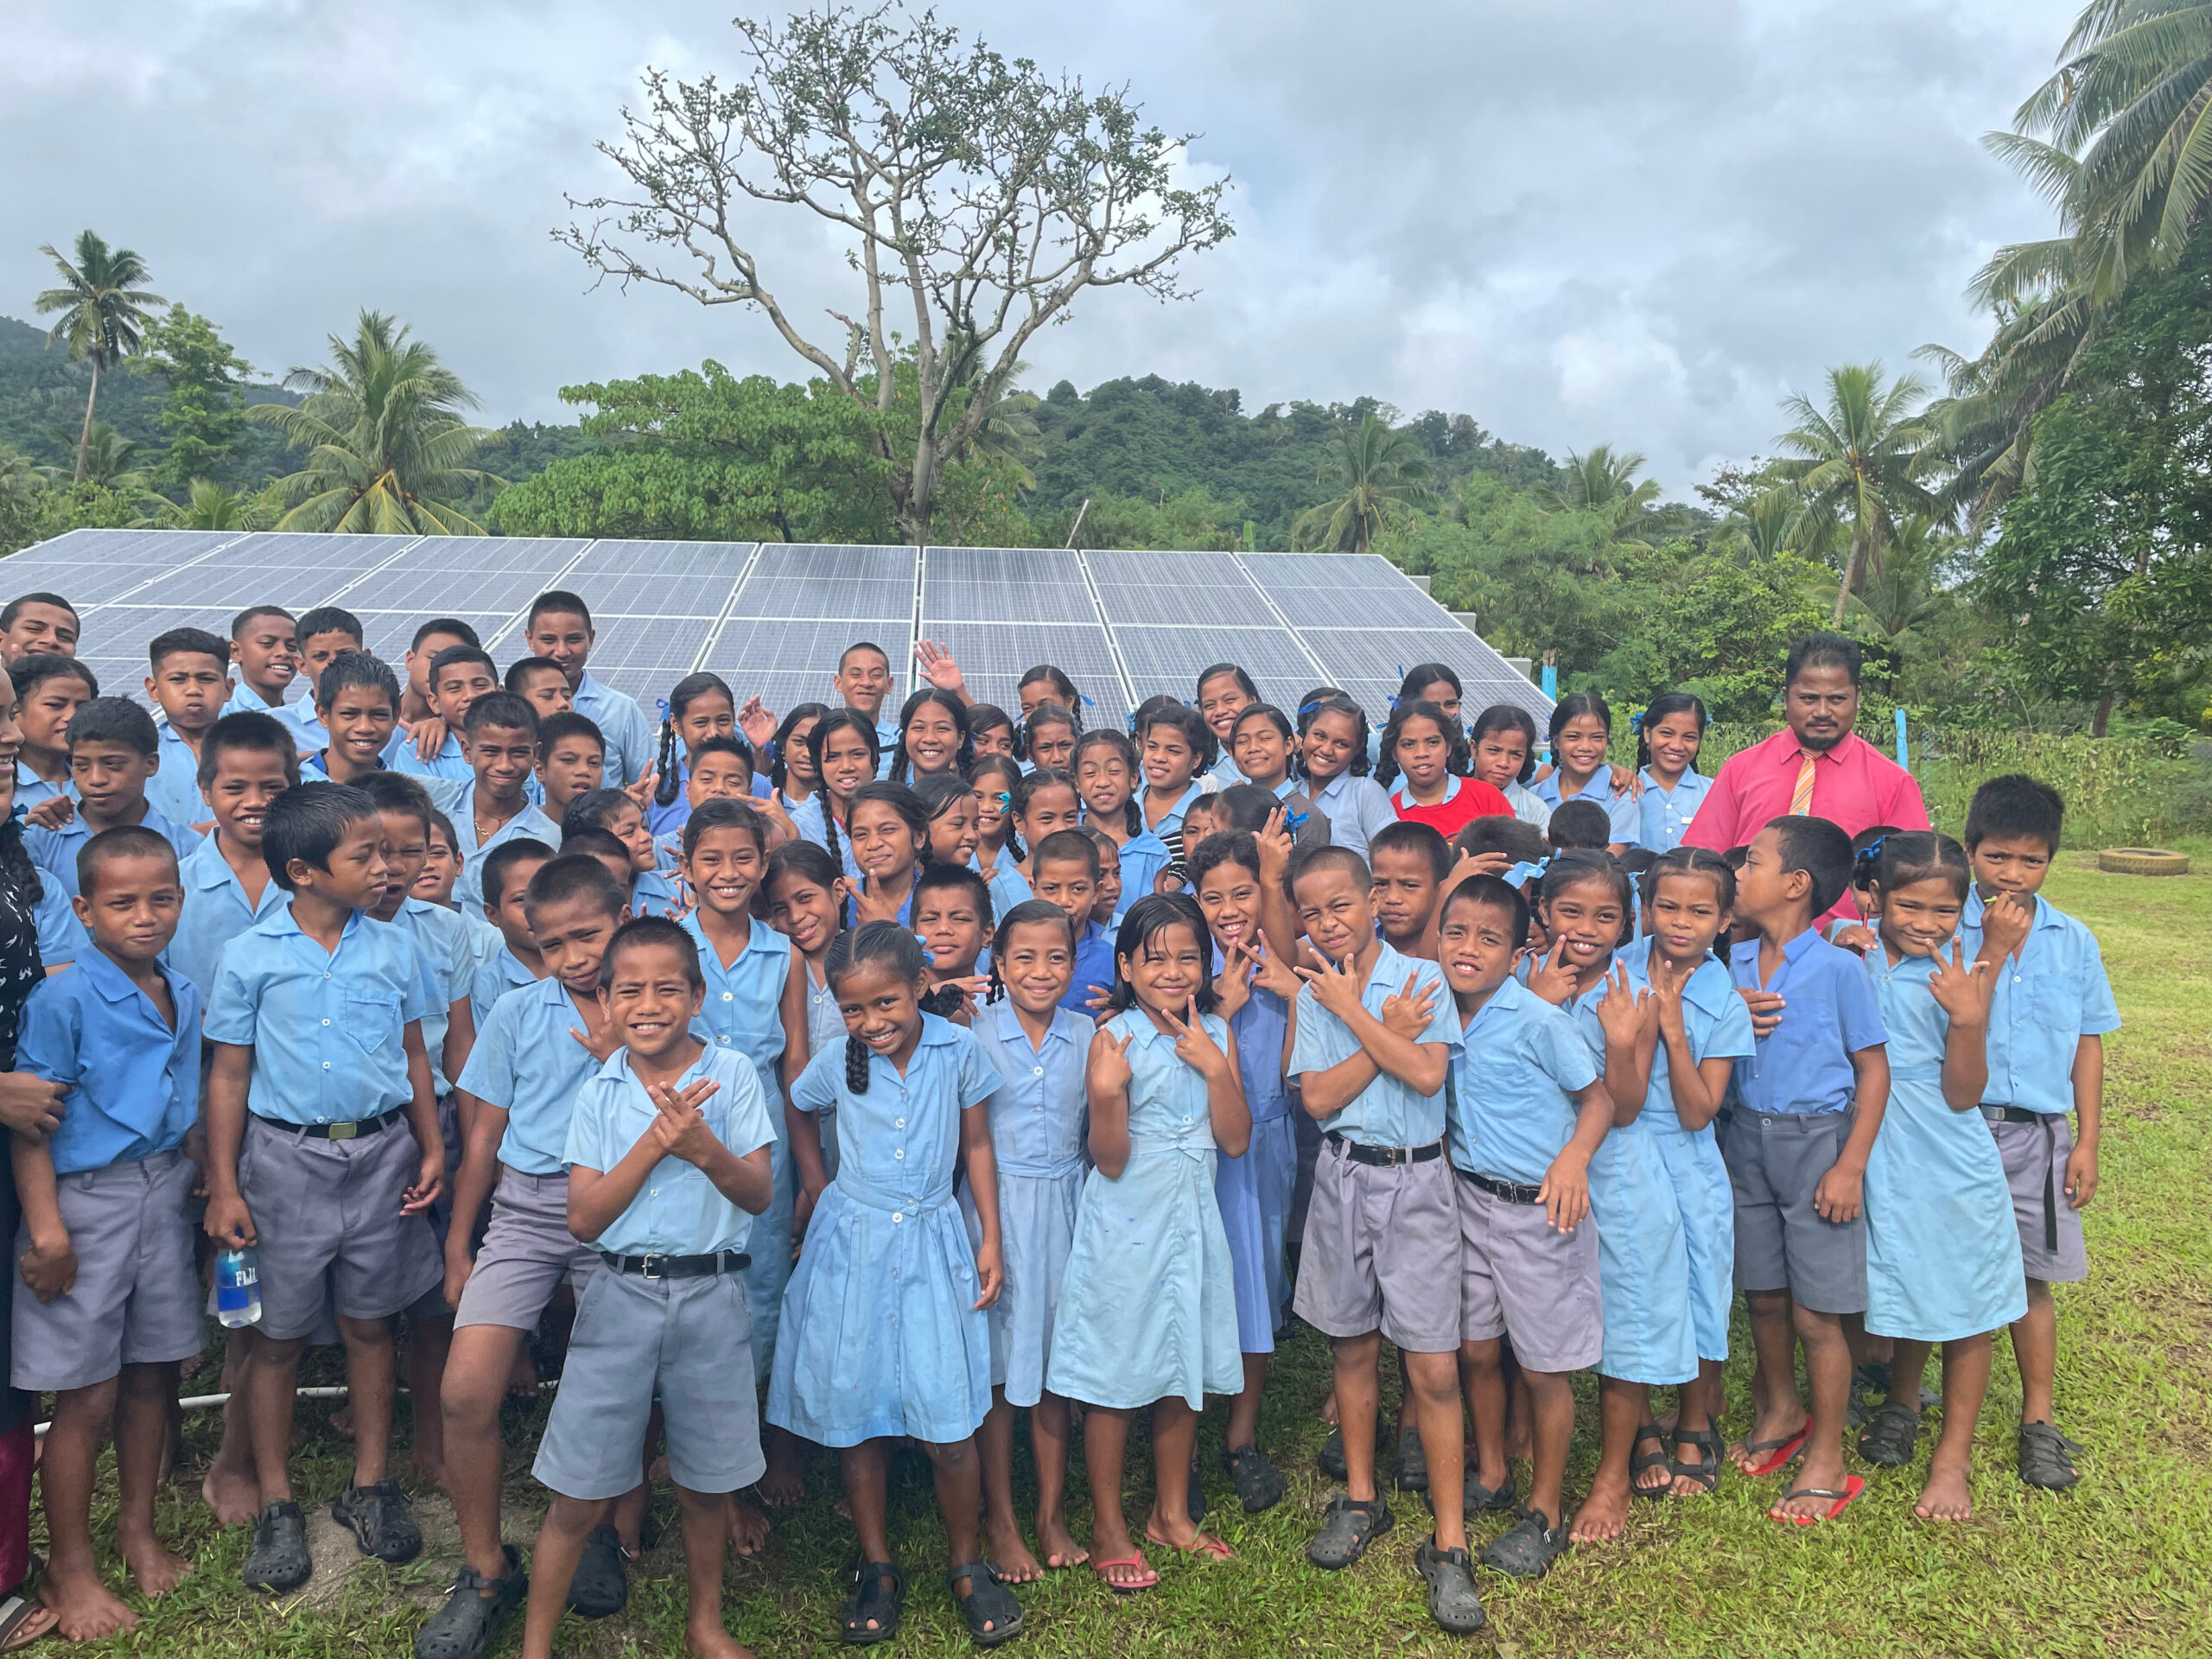 RACQ Solar helps power school education in Fiji RACQ